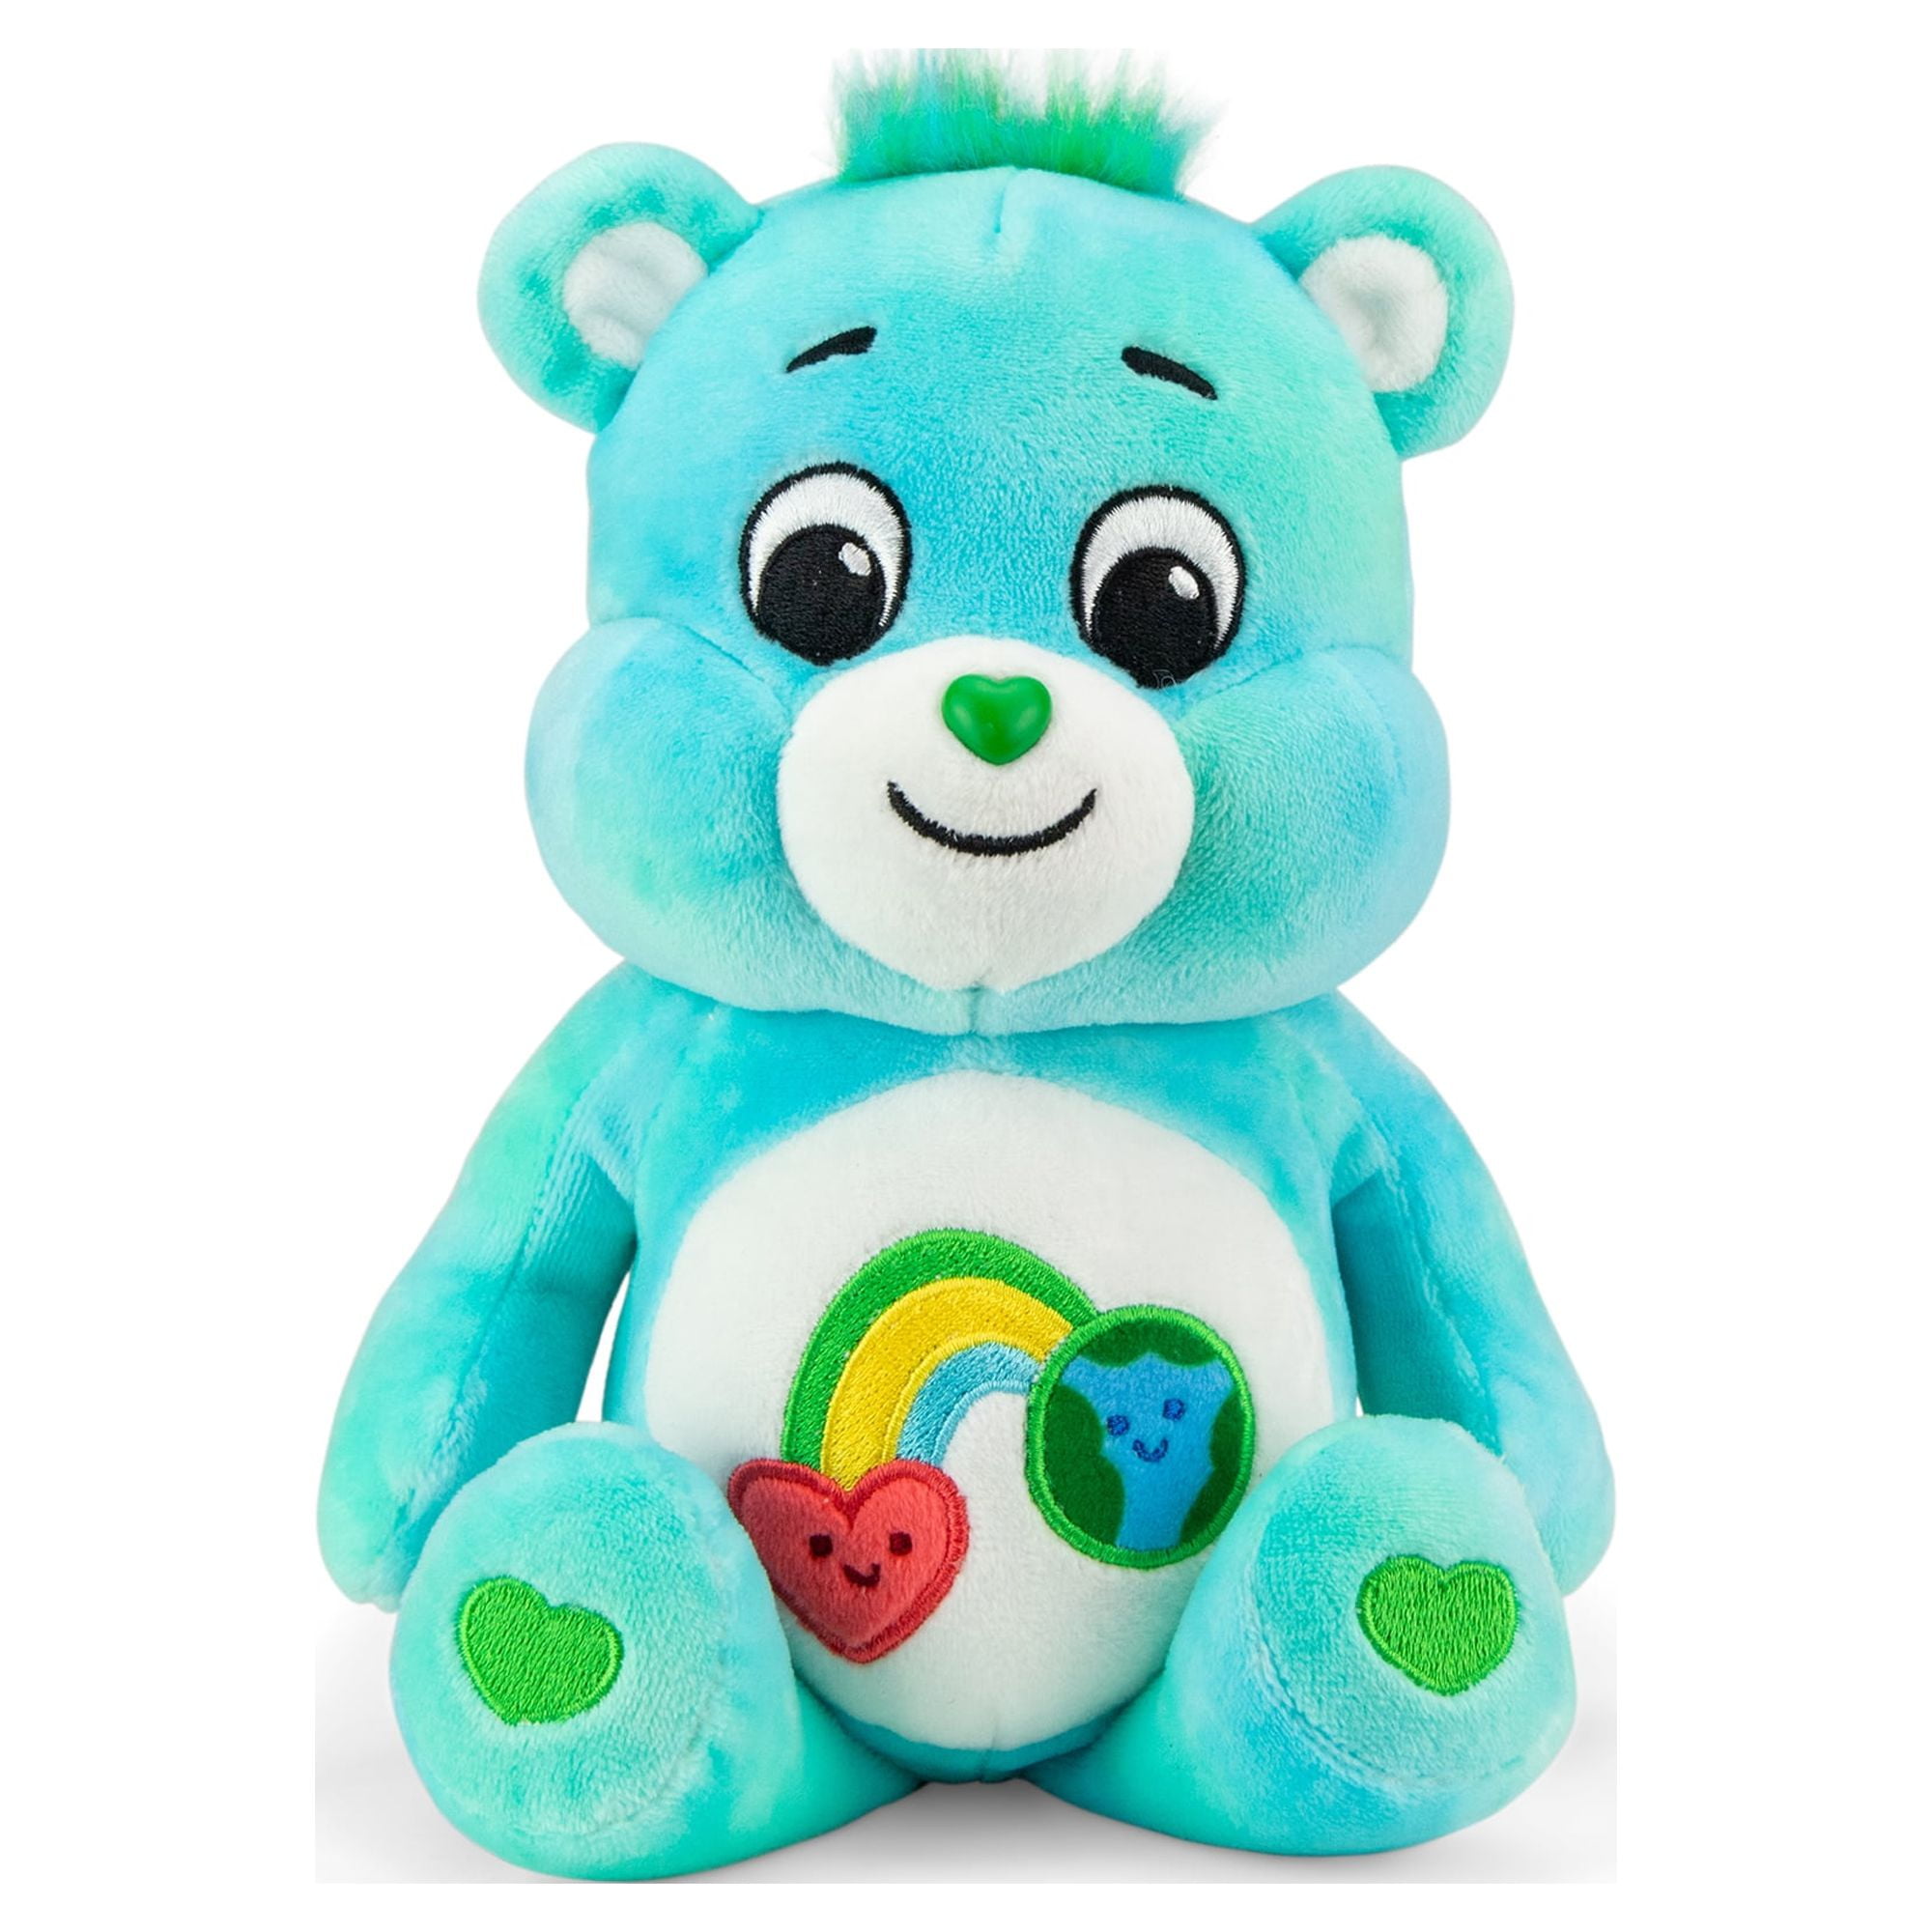 Care Bears 9 Inch Plush - I Care Bear - Soft Huggable Material!